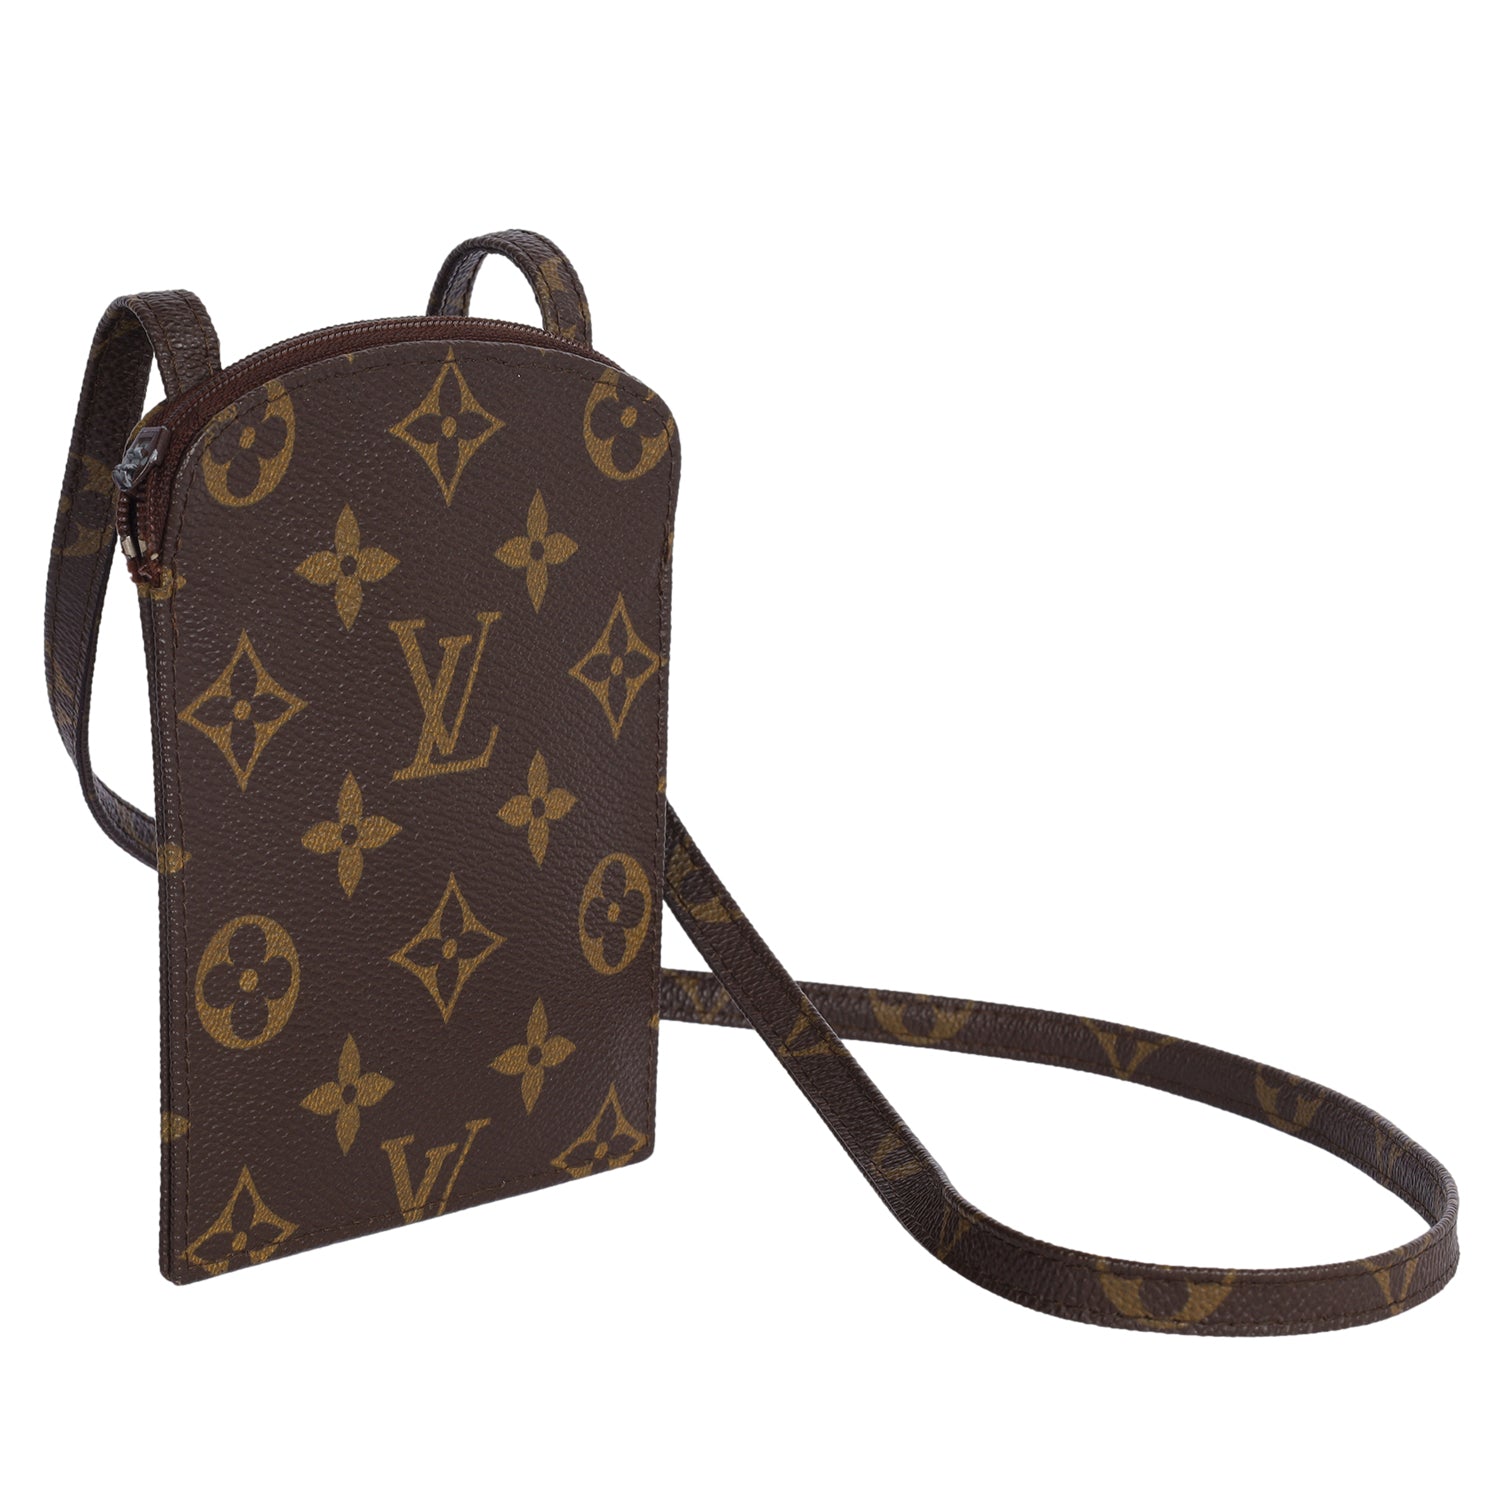 Pre-owned Louis Vuitton Gold Chain Link Shoulder Bag Strap